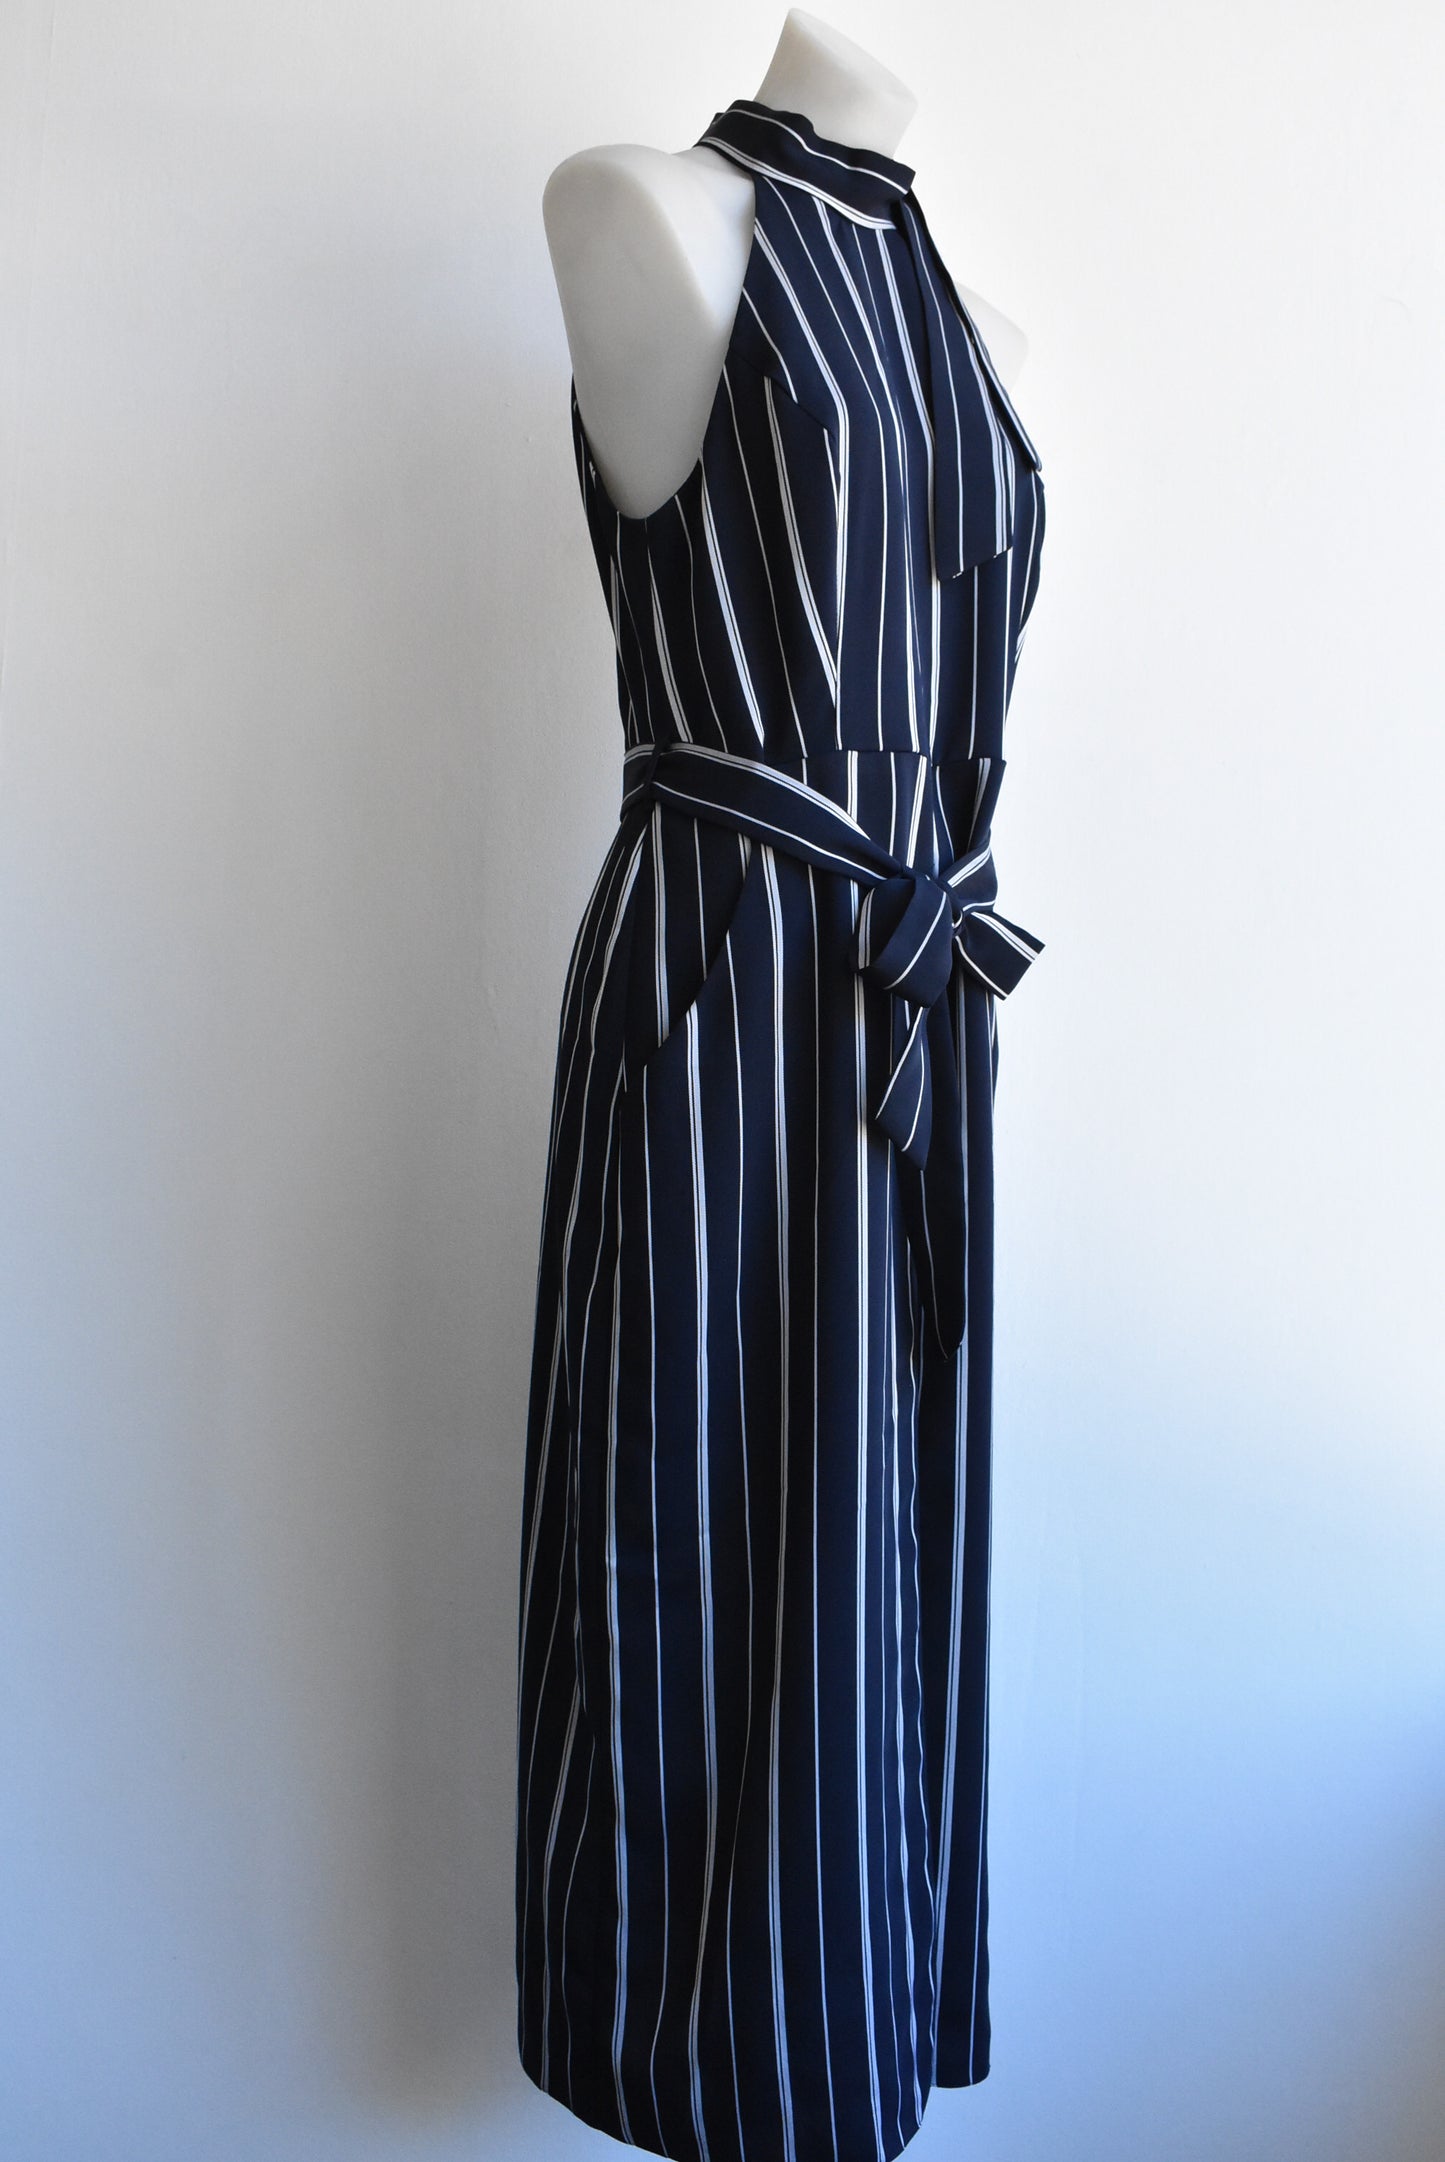 River Island striped blue split-skirt dress with pockets, size 14